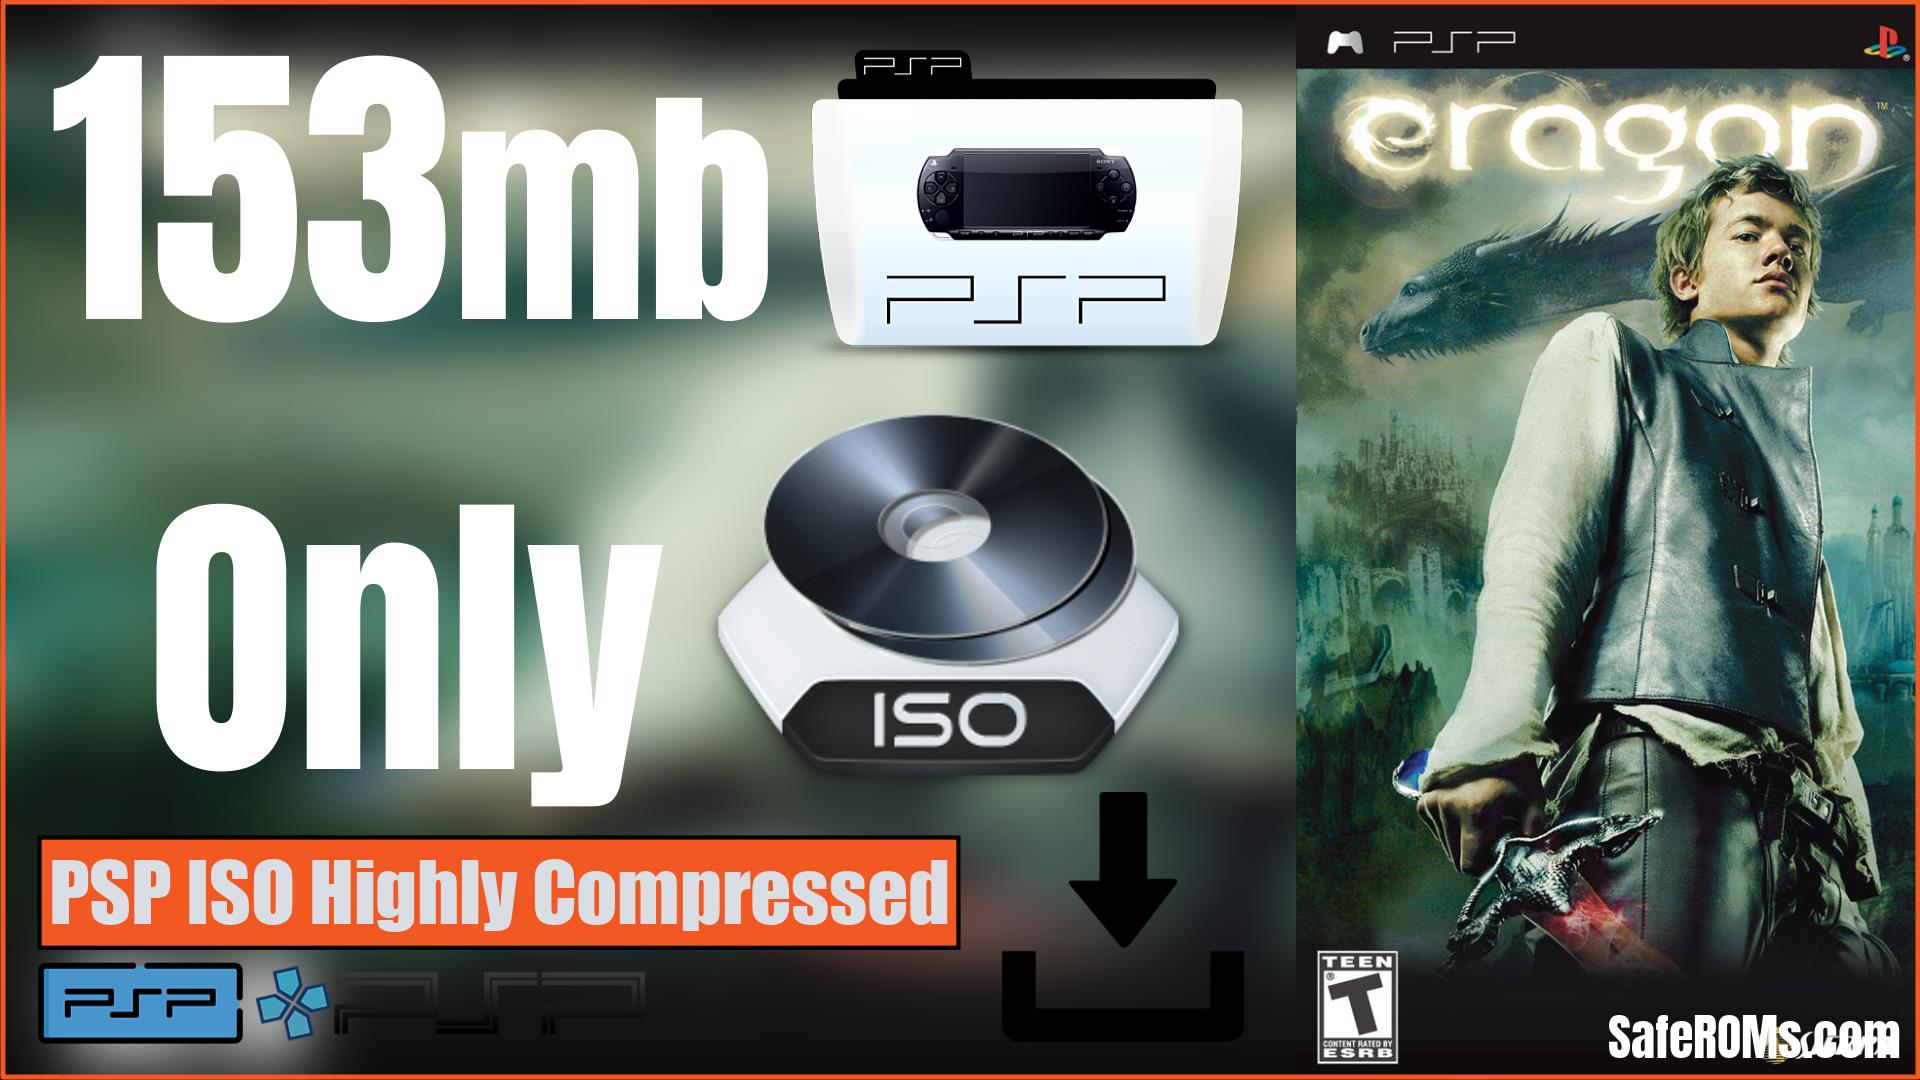 Eragon (153mb) PSP ISO Highly Compressed Download